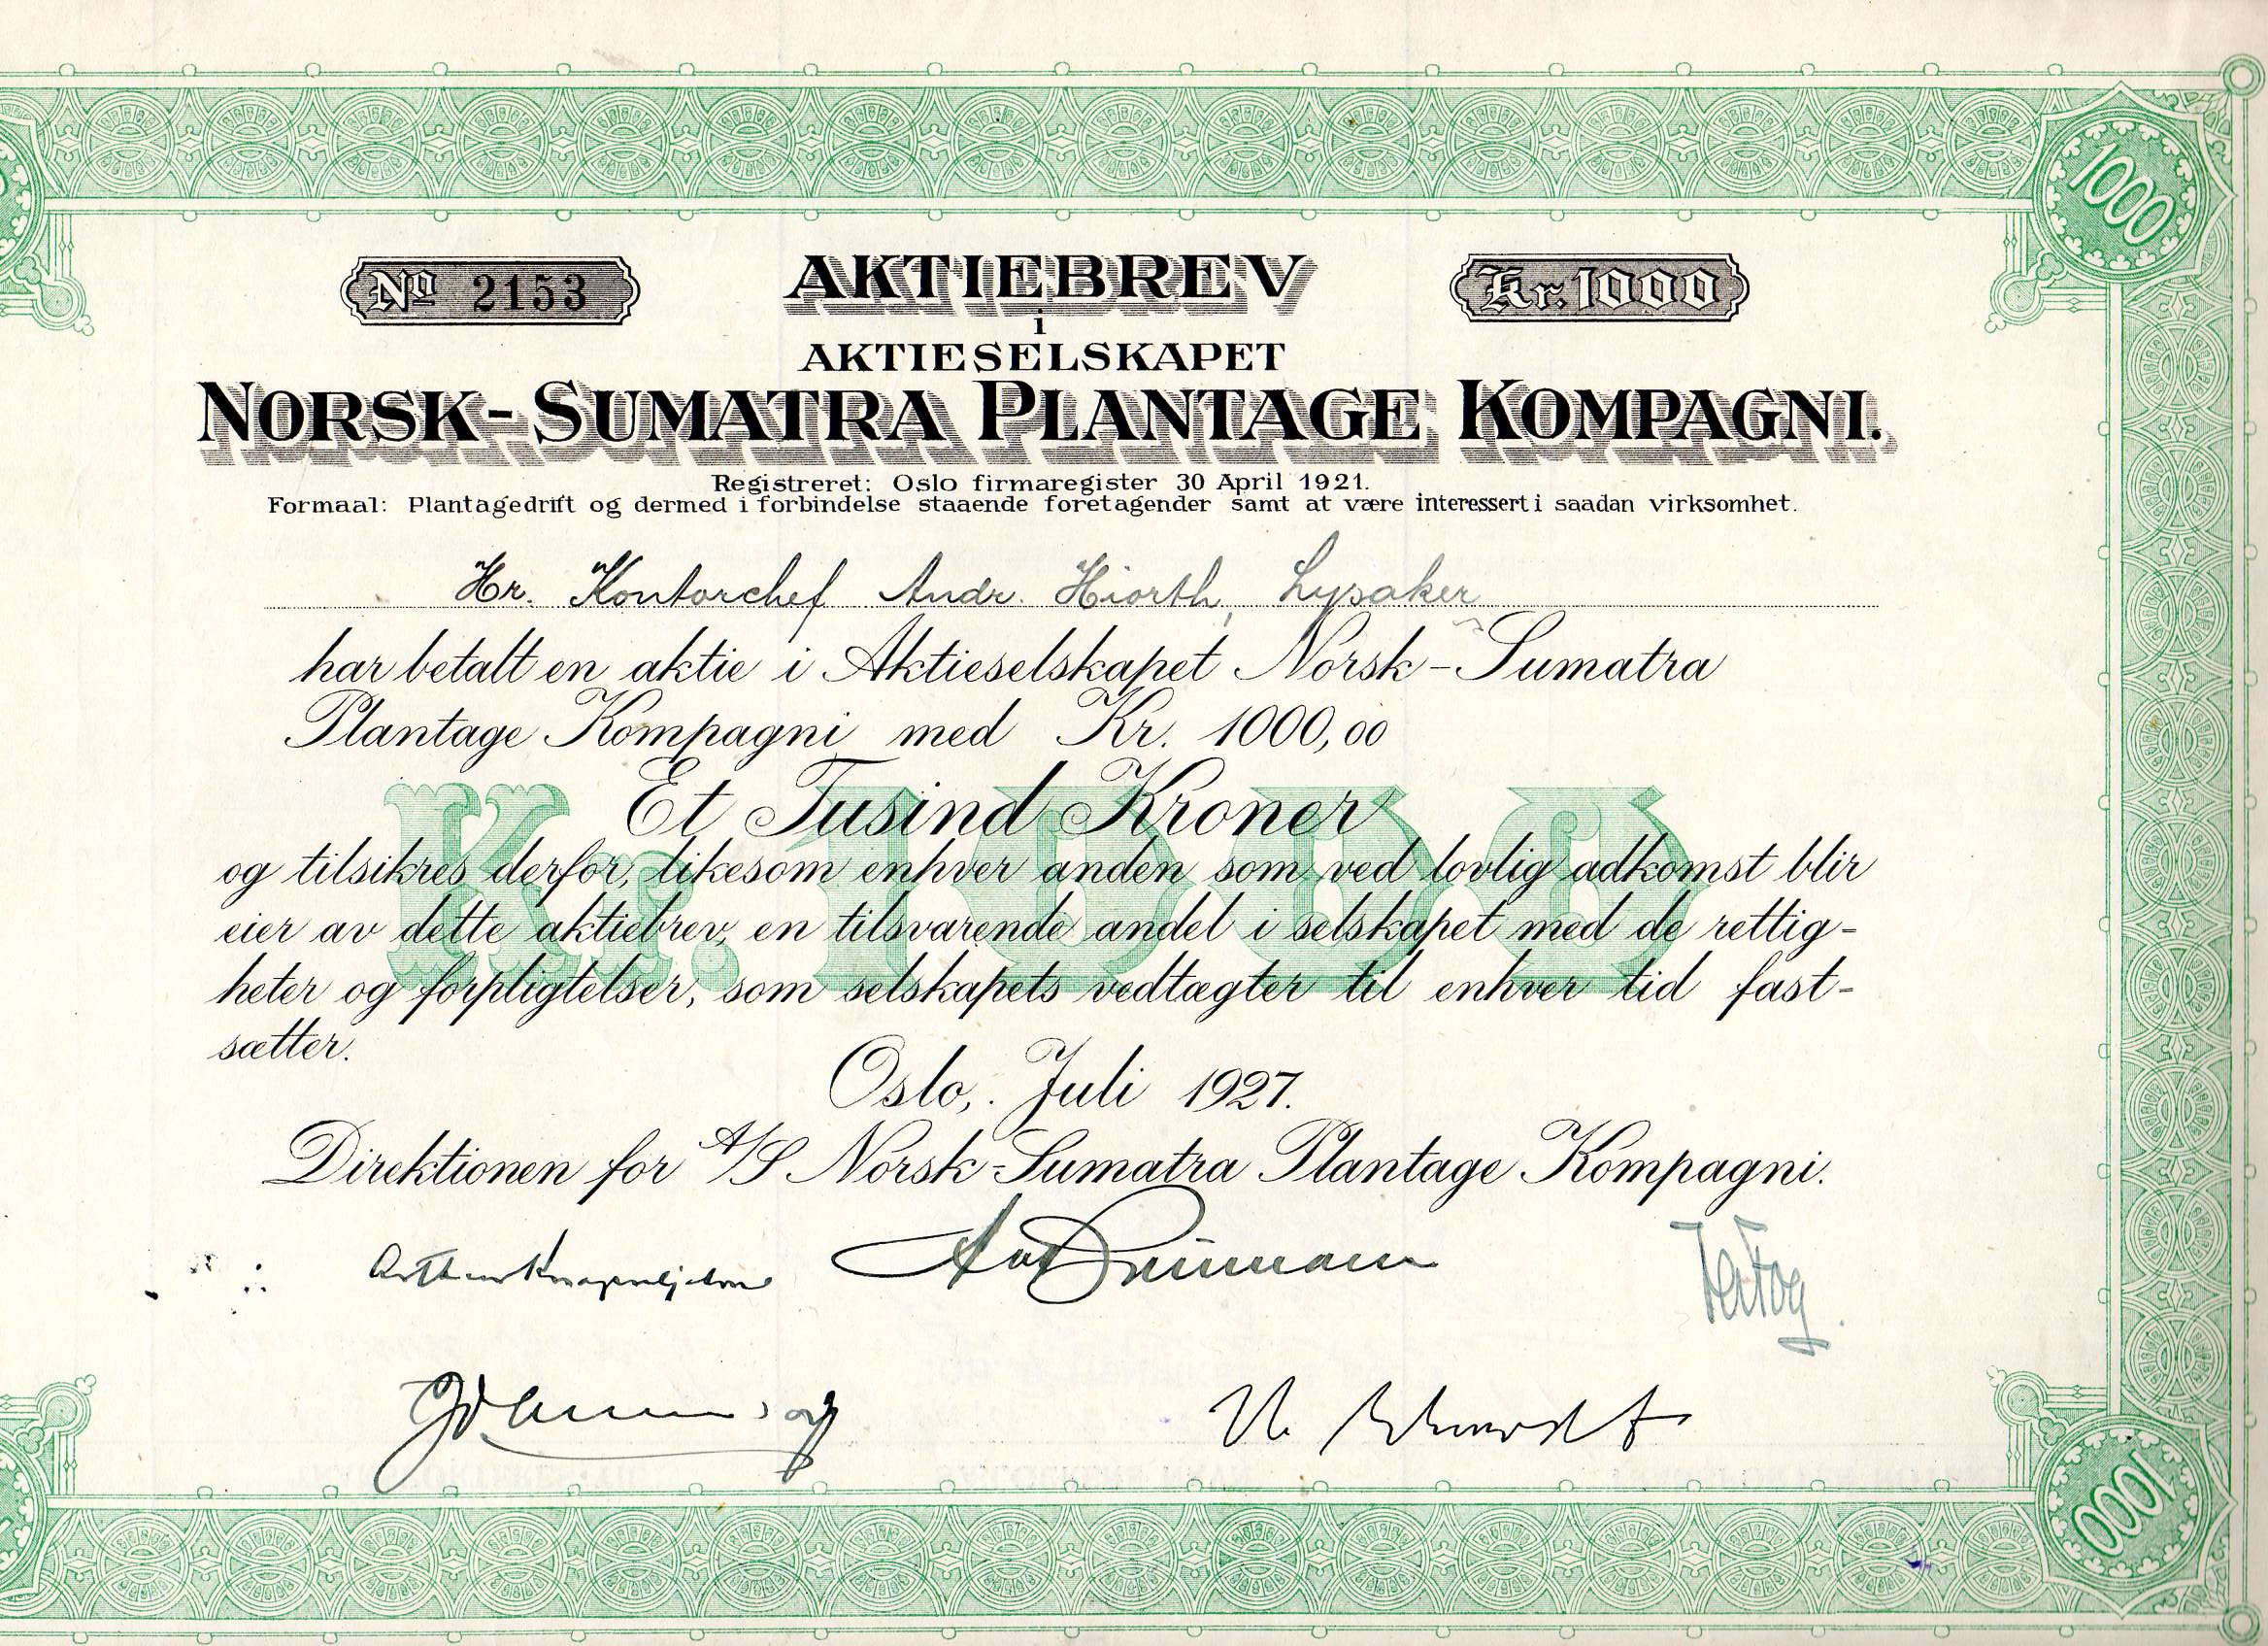 Norsk-Sumatra plantage kompagni kr 1000 Oslo 1927 nr 2153/